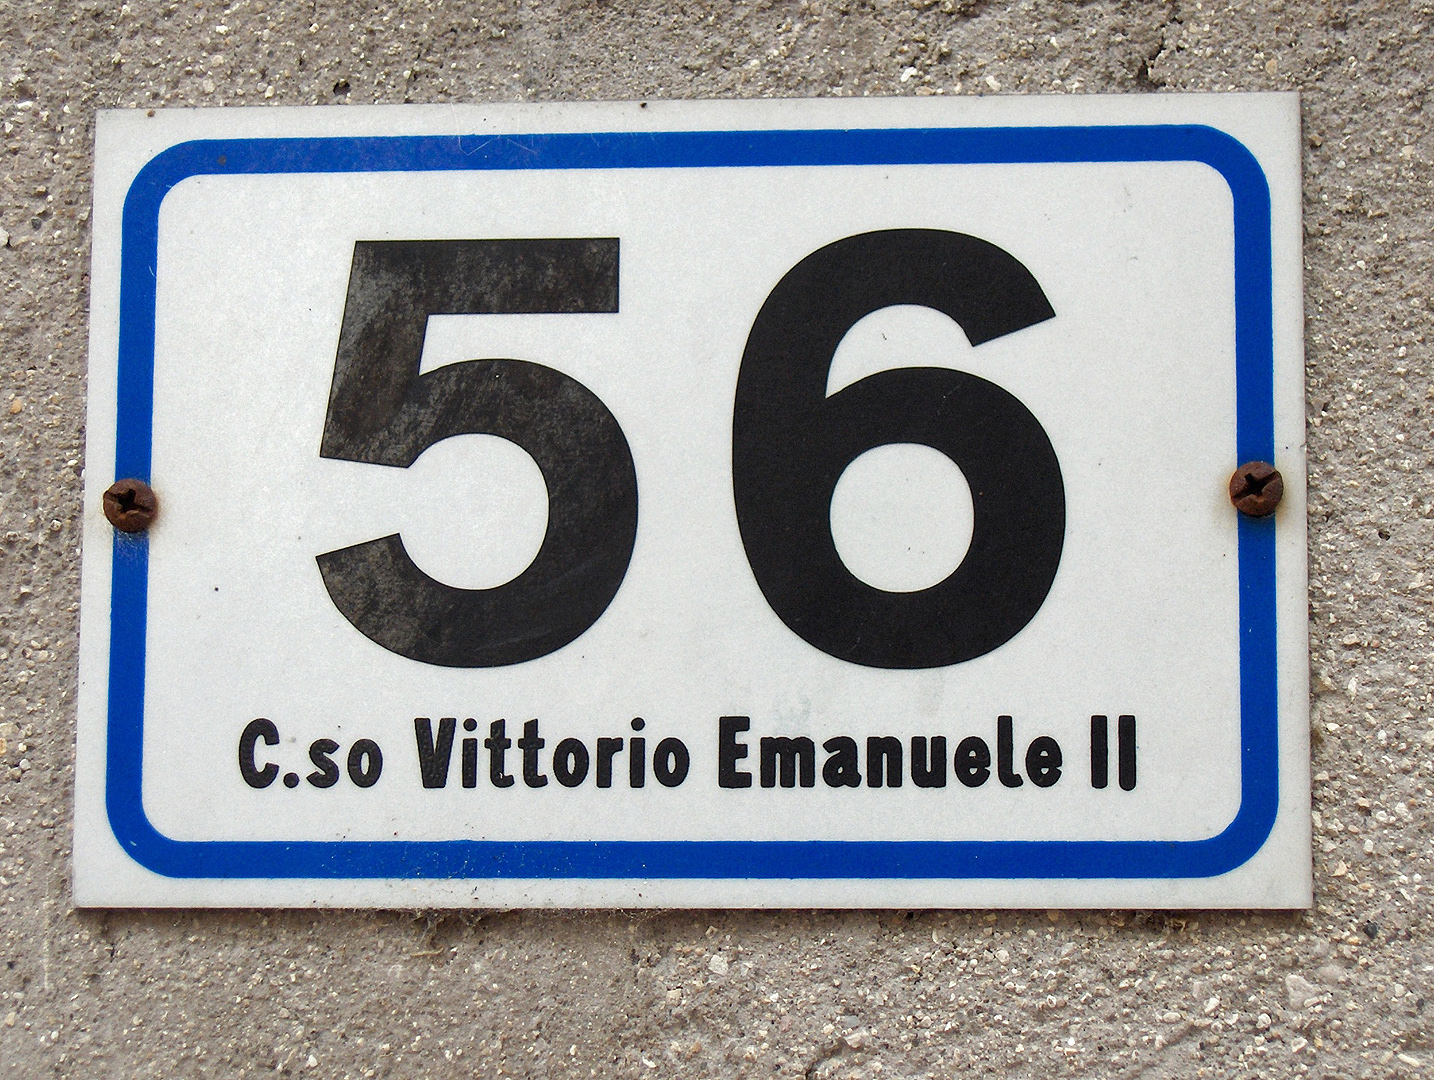 Corso Vittorio Emanuele II; Corso Vittorio Emanuele II